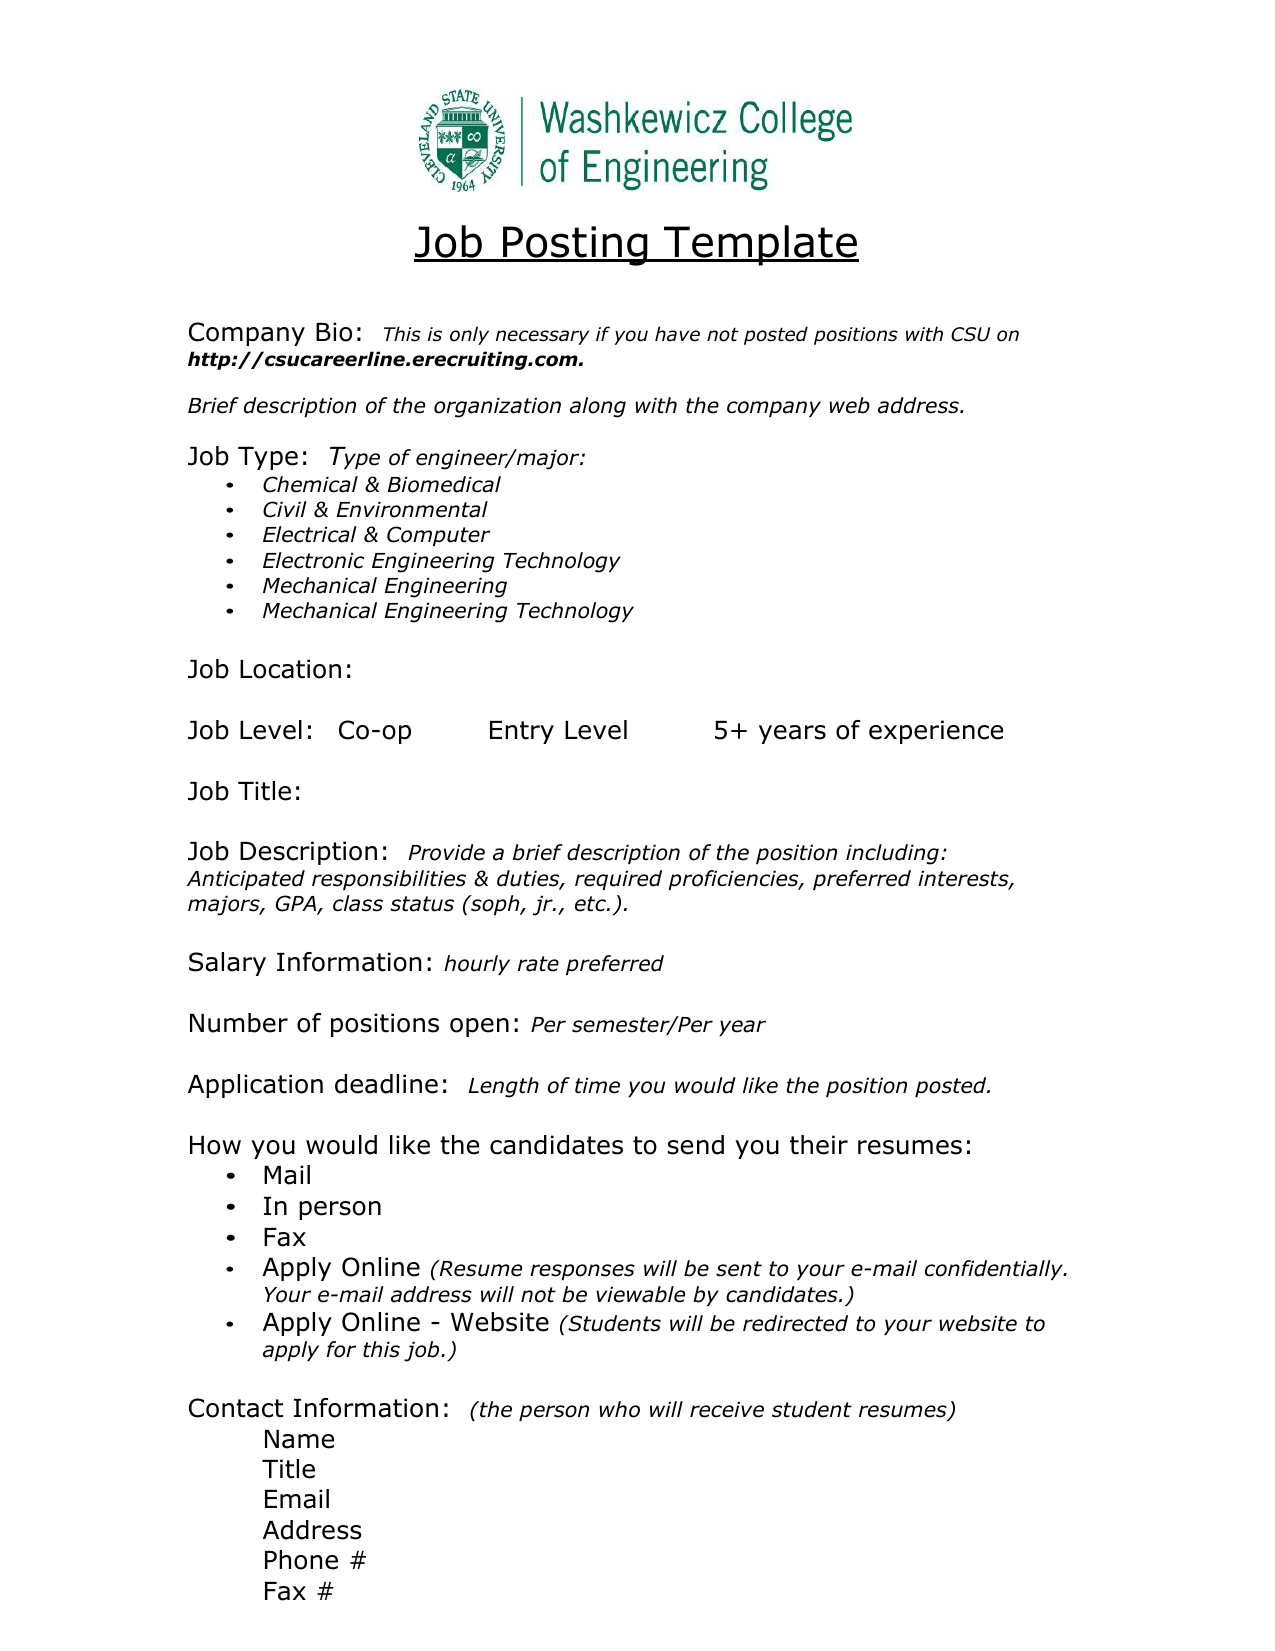 job-posting-template-masaka-luxiarweddingphoto